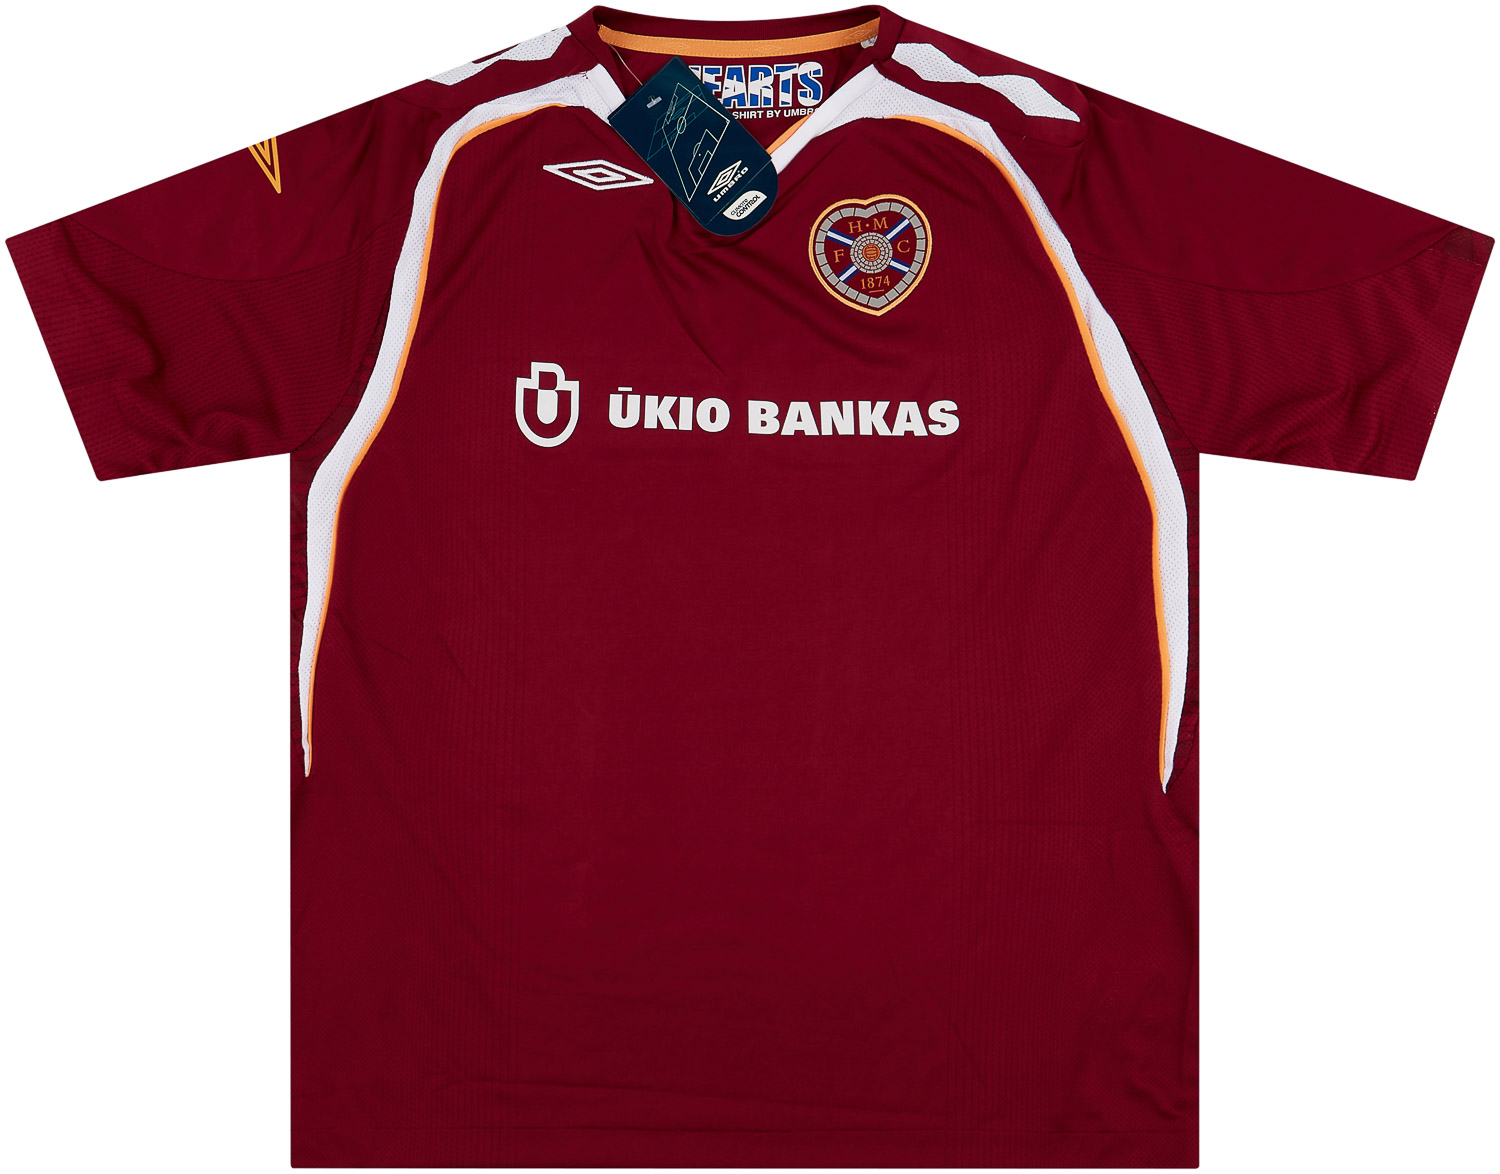 2007-08 Heart Of Midlothian (Hearts) Home Shirt Women's ()